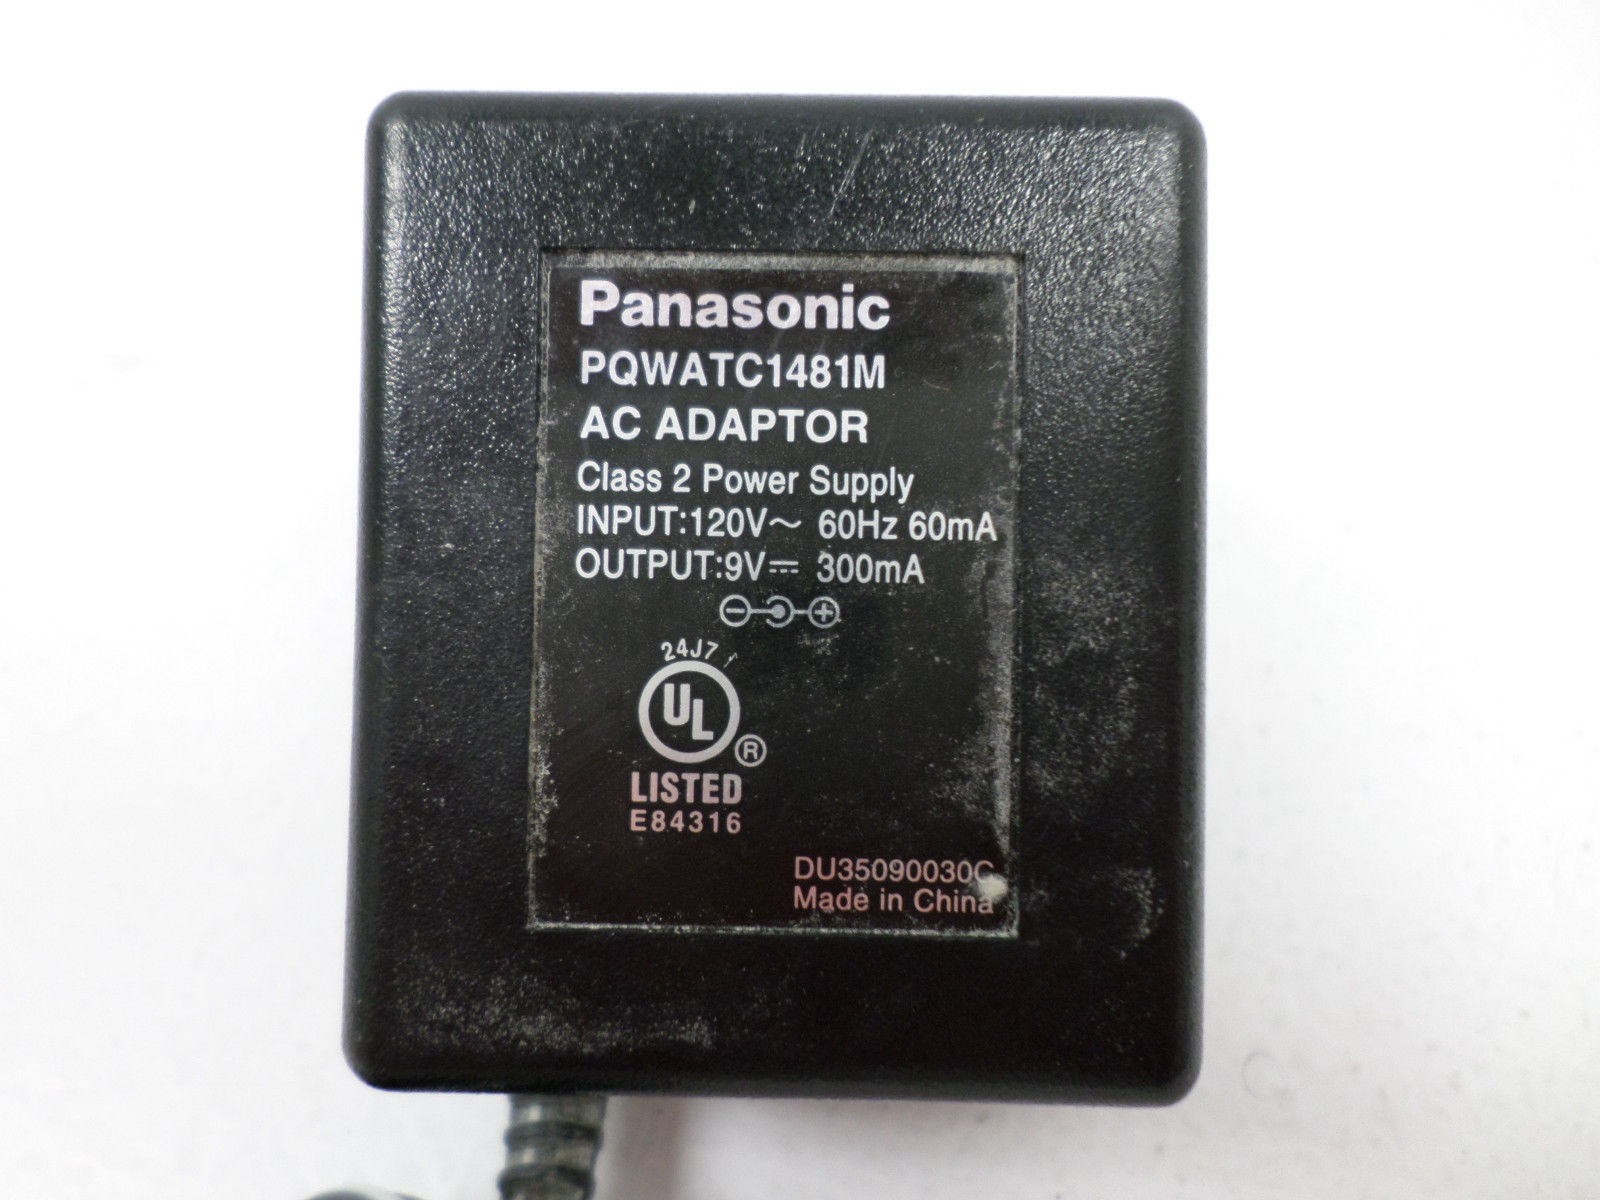 New 9V 300mA Panasonic AC ADAPTER PQWATC1481M Power Supply - Click Image to Close